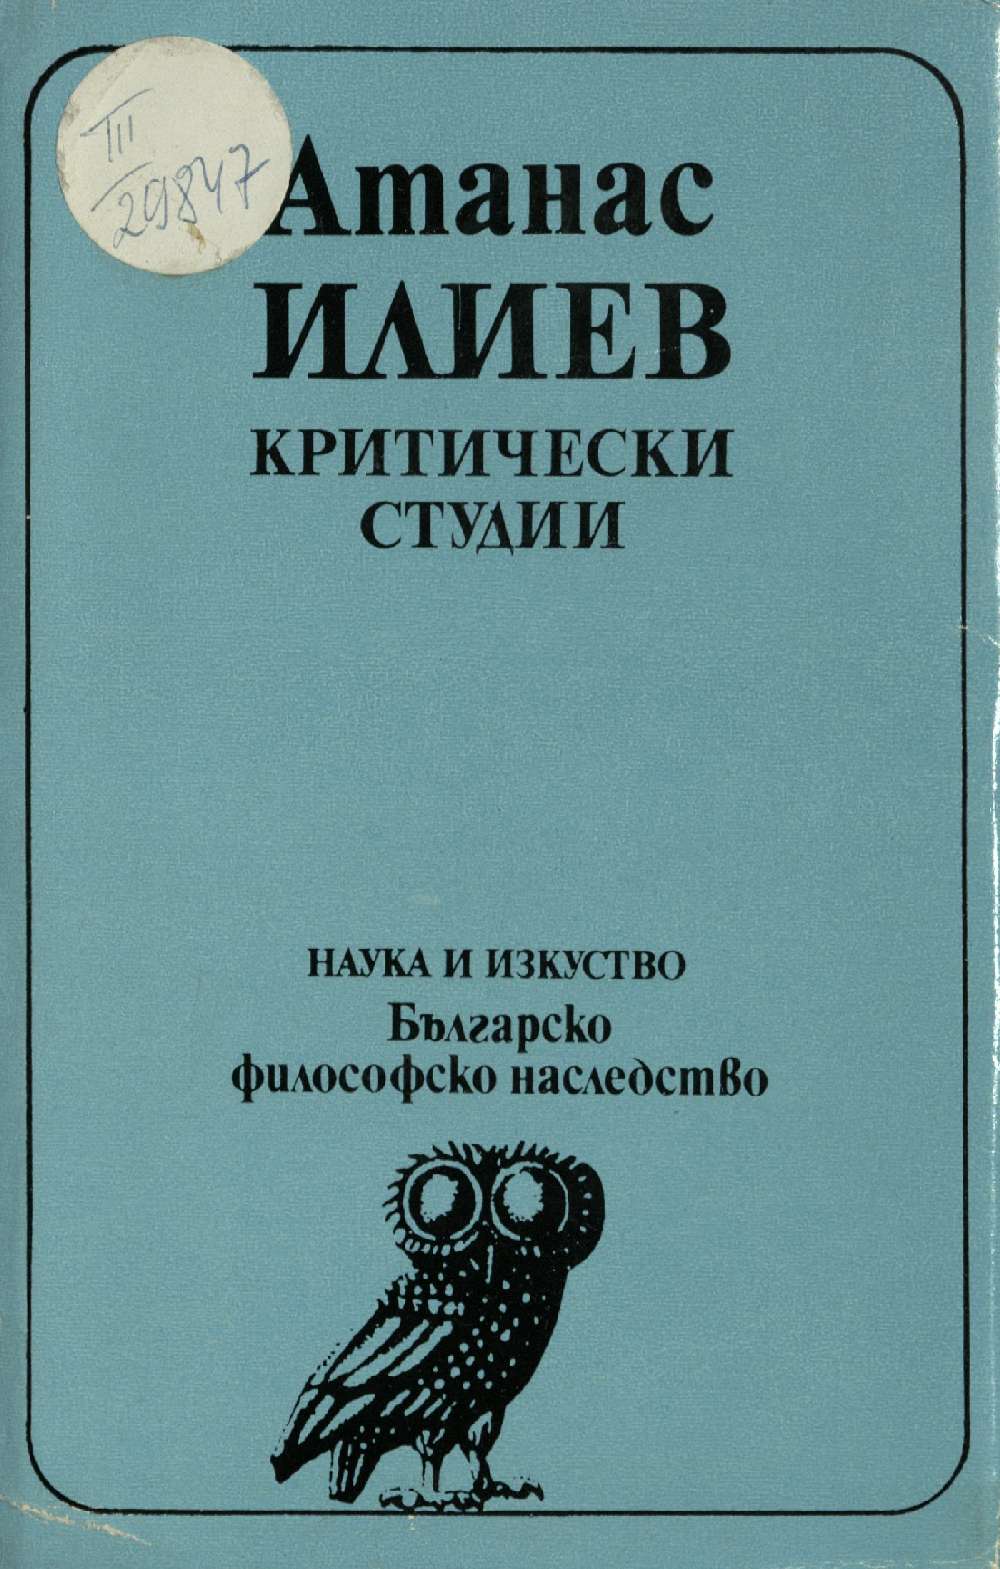 Атанас Илиев. Критически студии, 1989